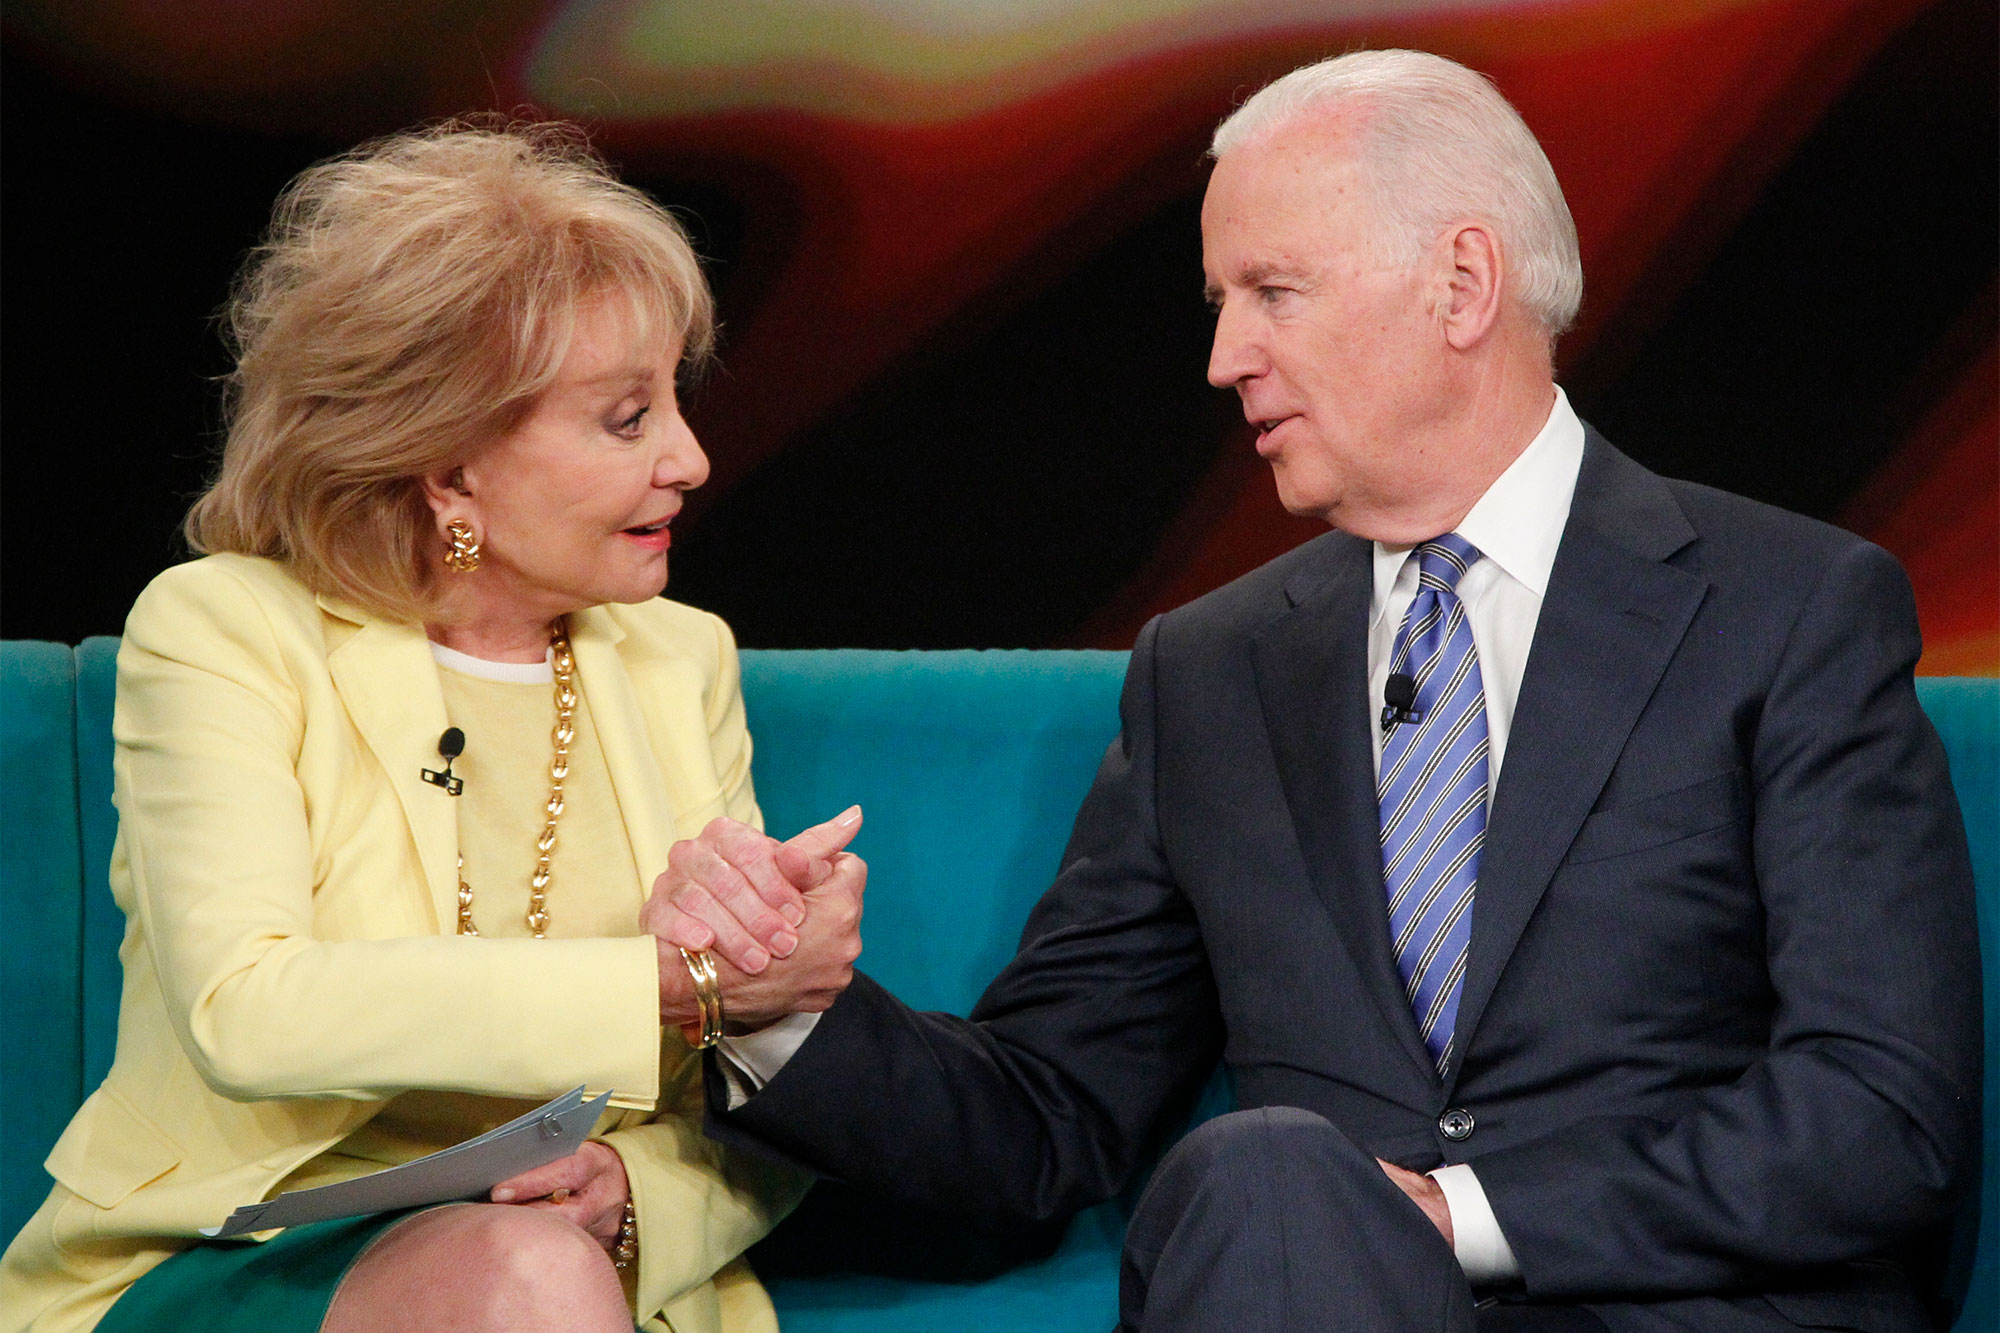 Barbara Walters and Joe Biden on "The View"